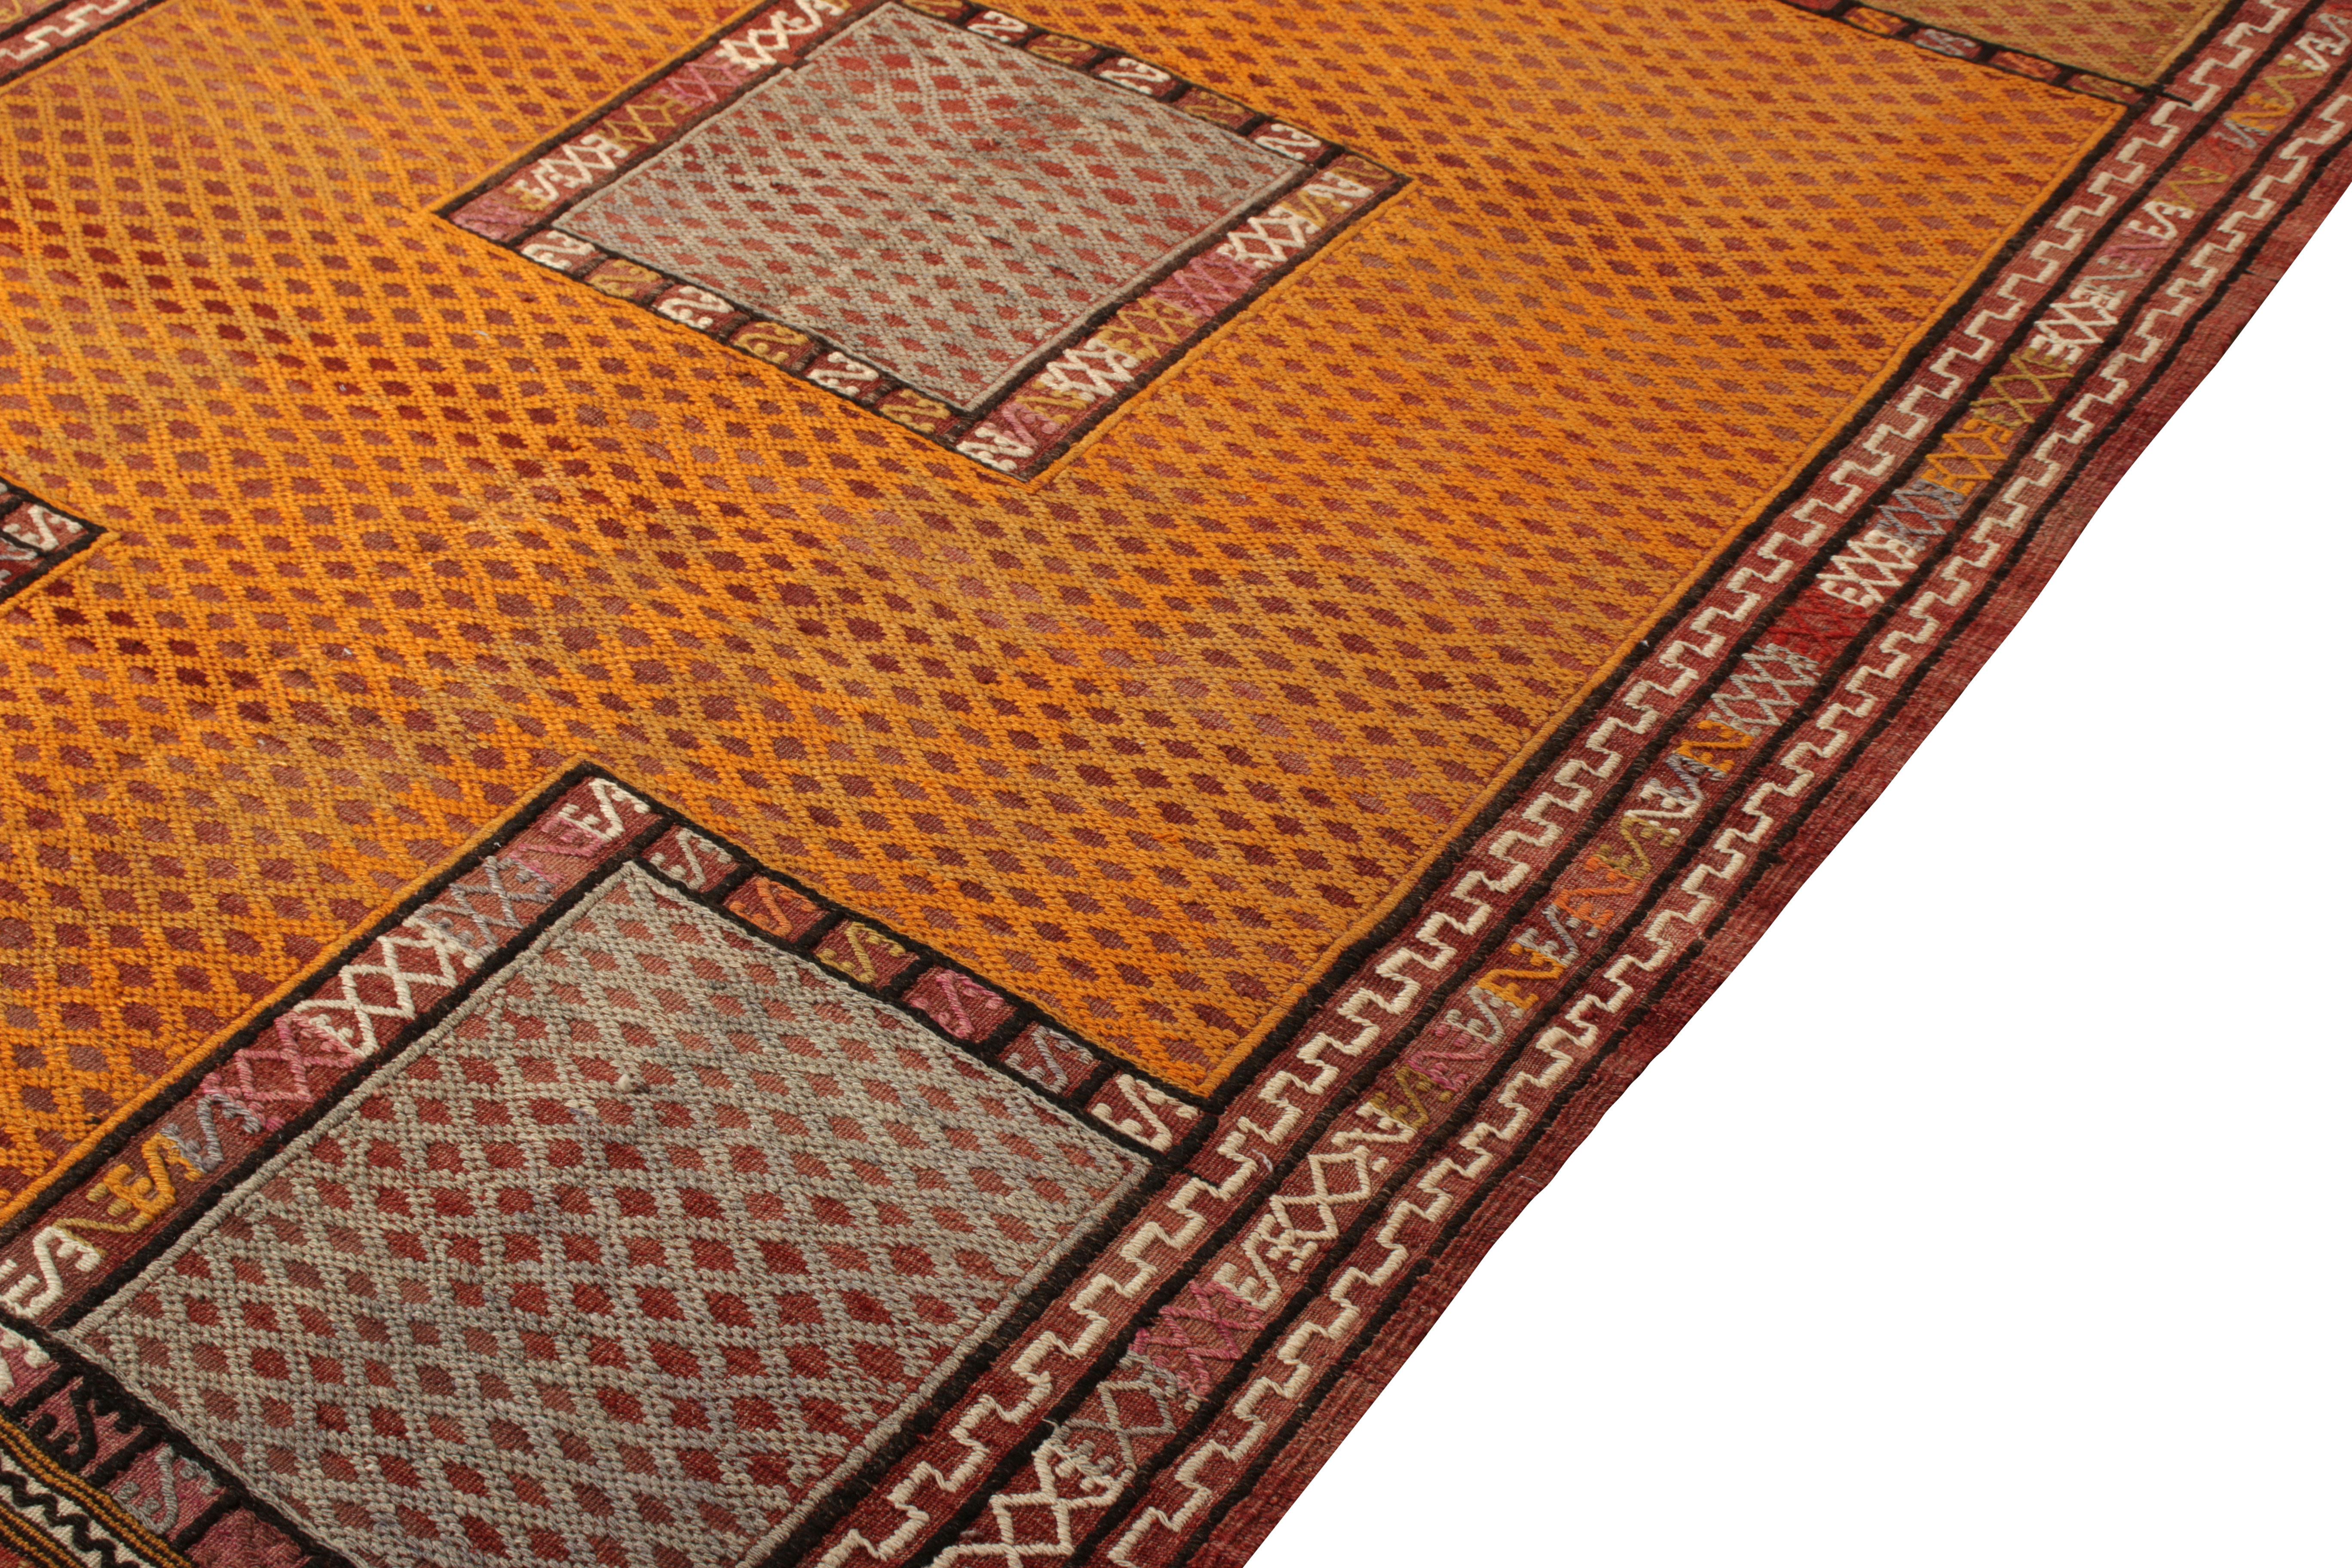 Hand-Woven Handmade Vintage Turkish Kilim Rug Gold Multi-Color Textural Geometric Pattern